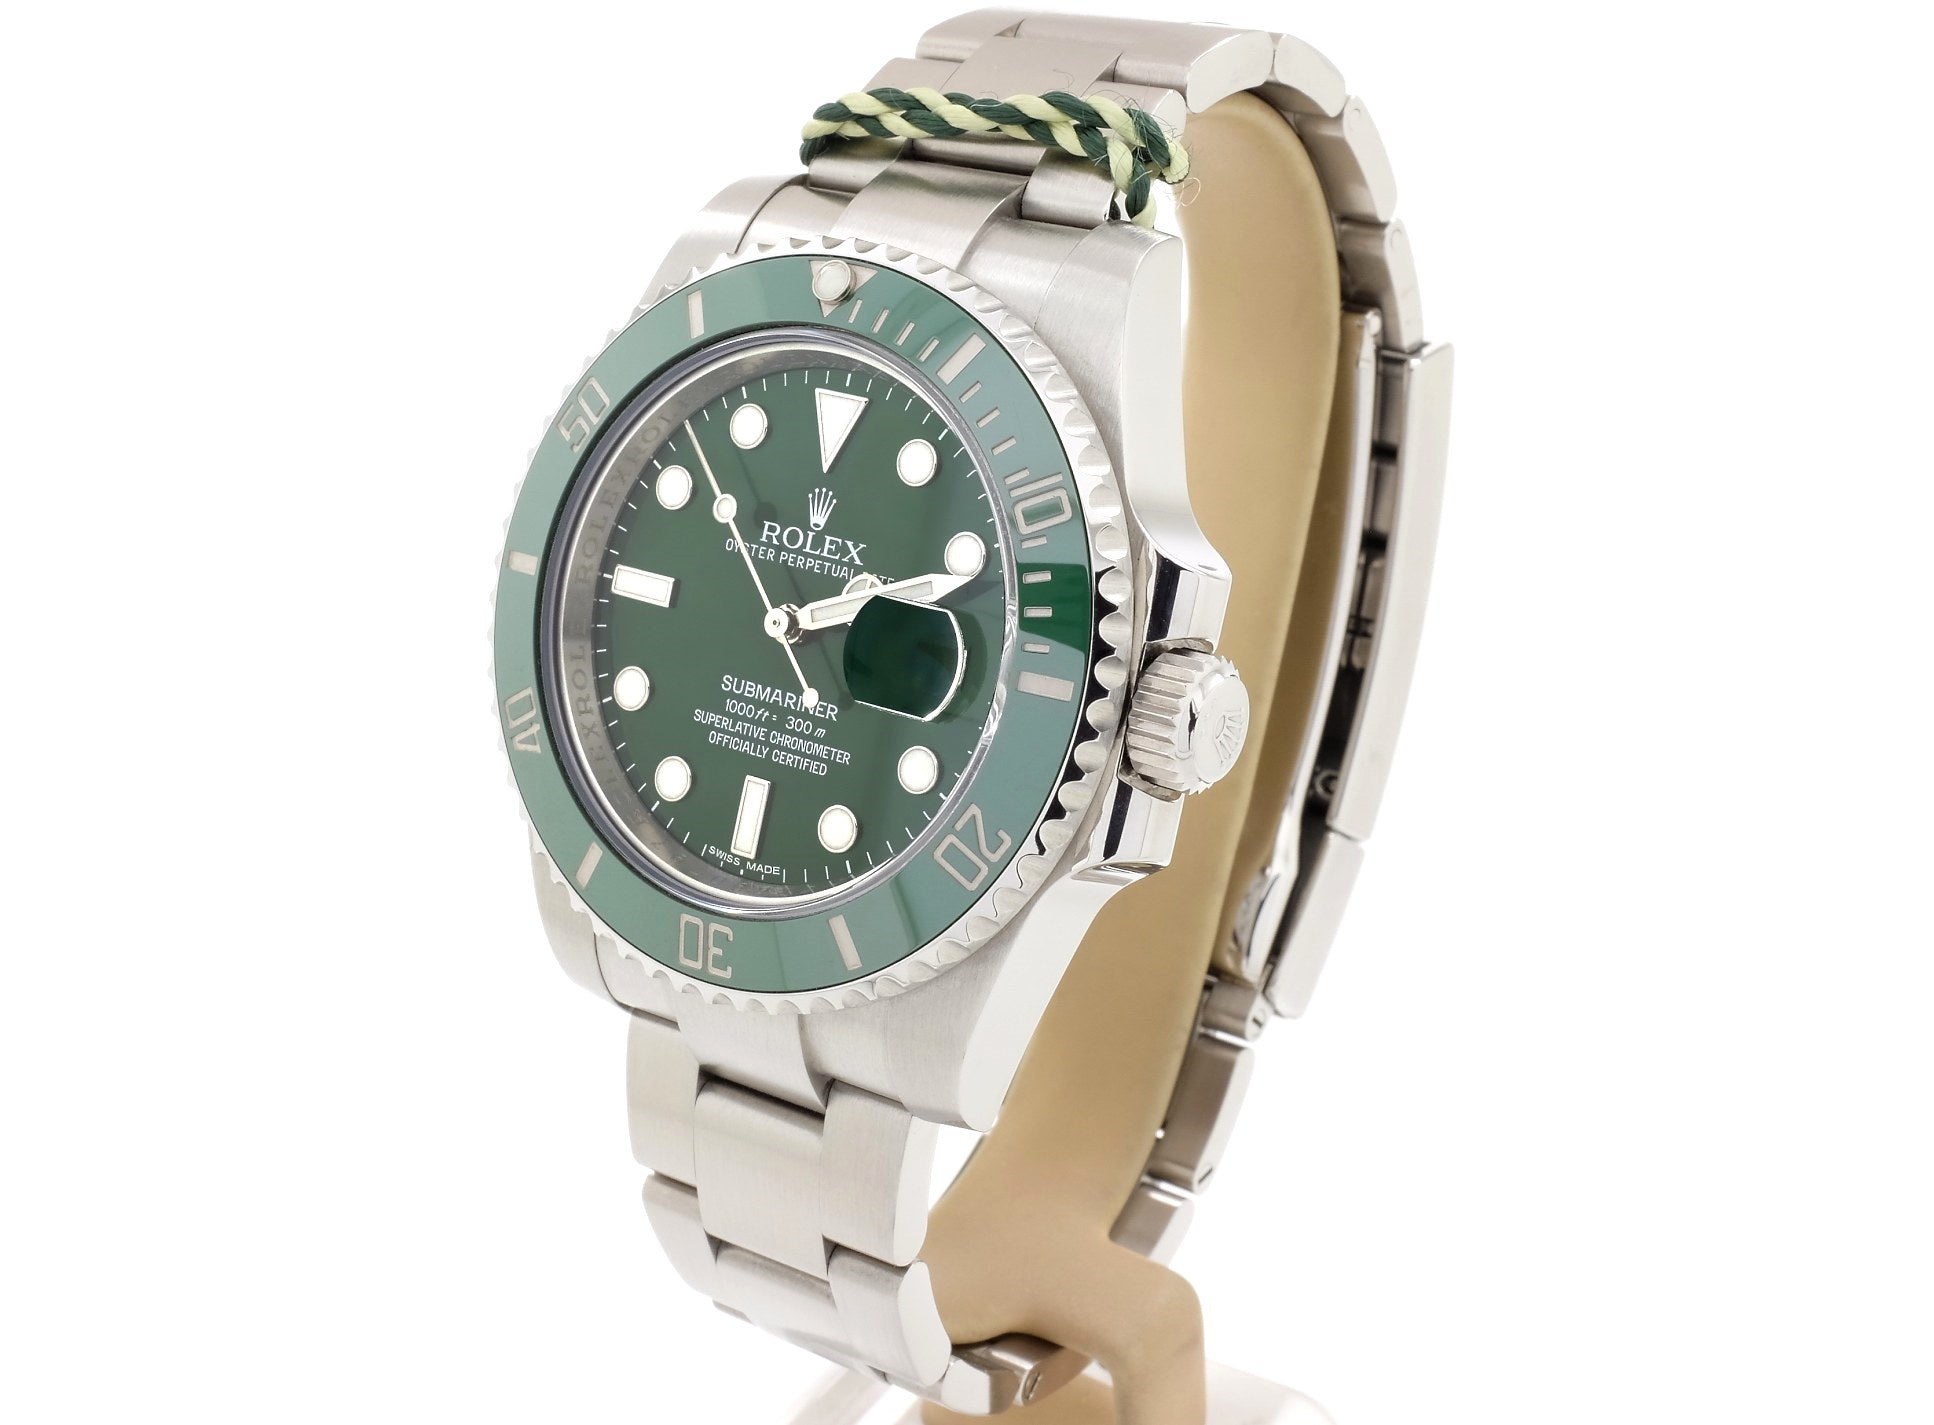 Rolex Submariner 116610LV Green Dial (Hulk) Stainless Steel Watch